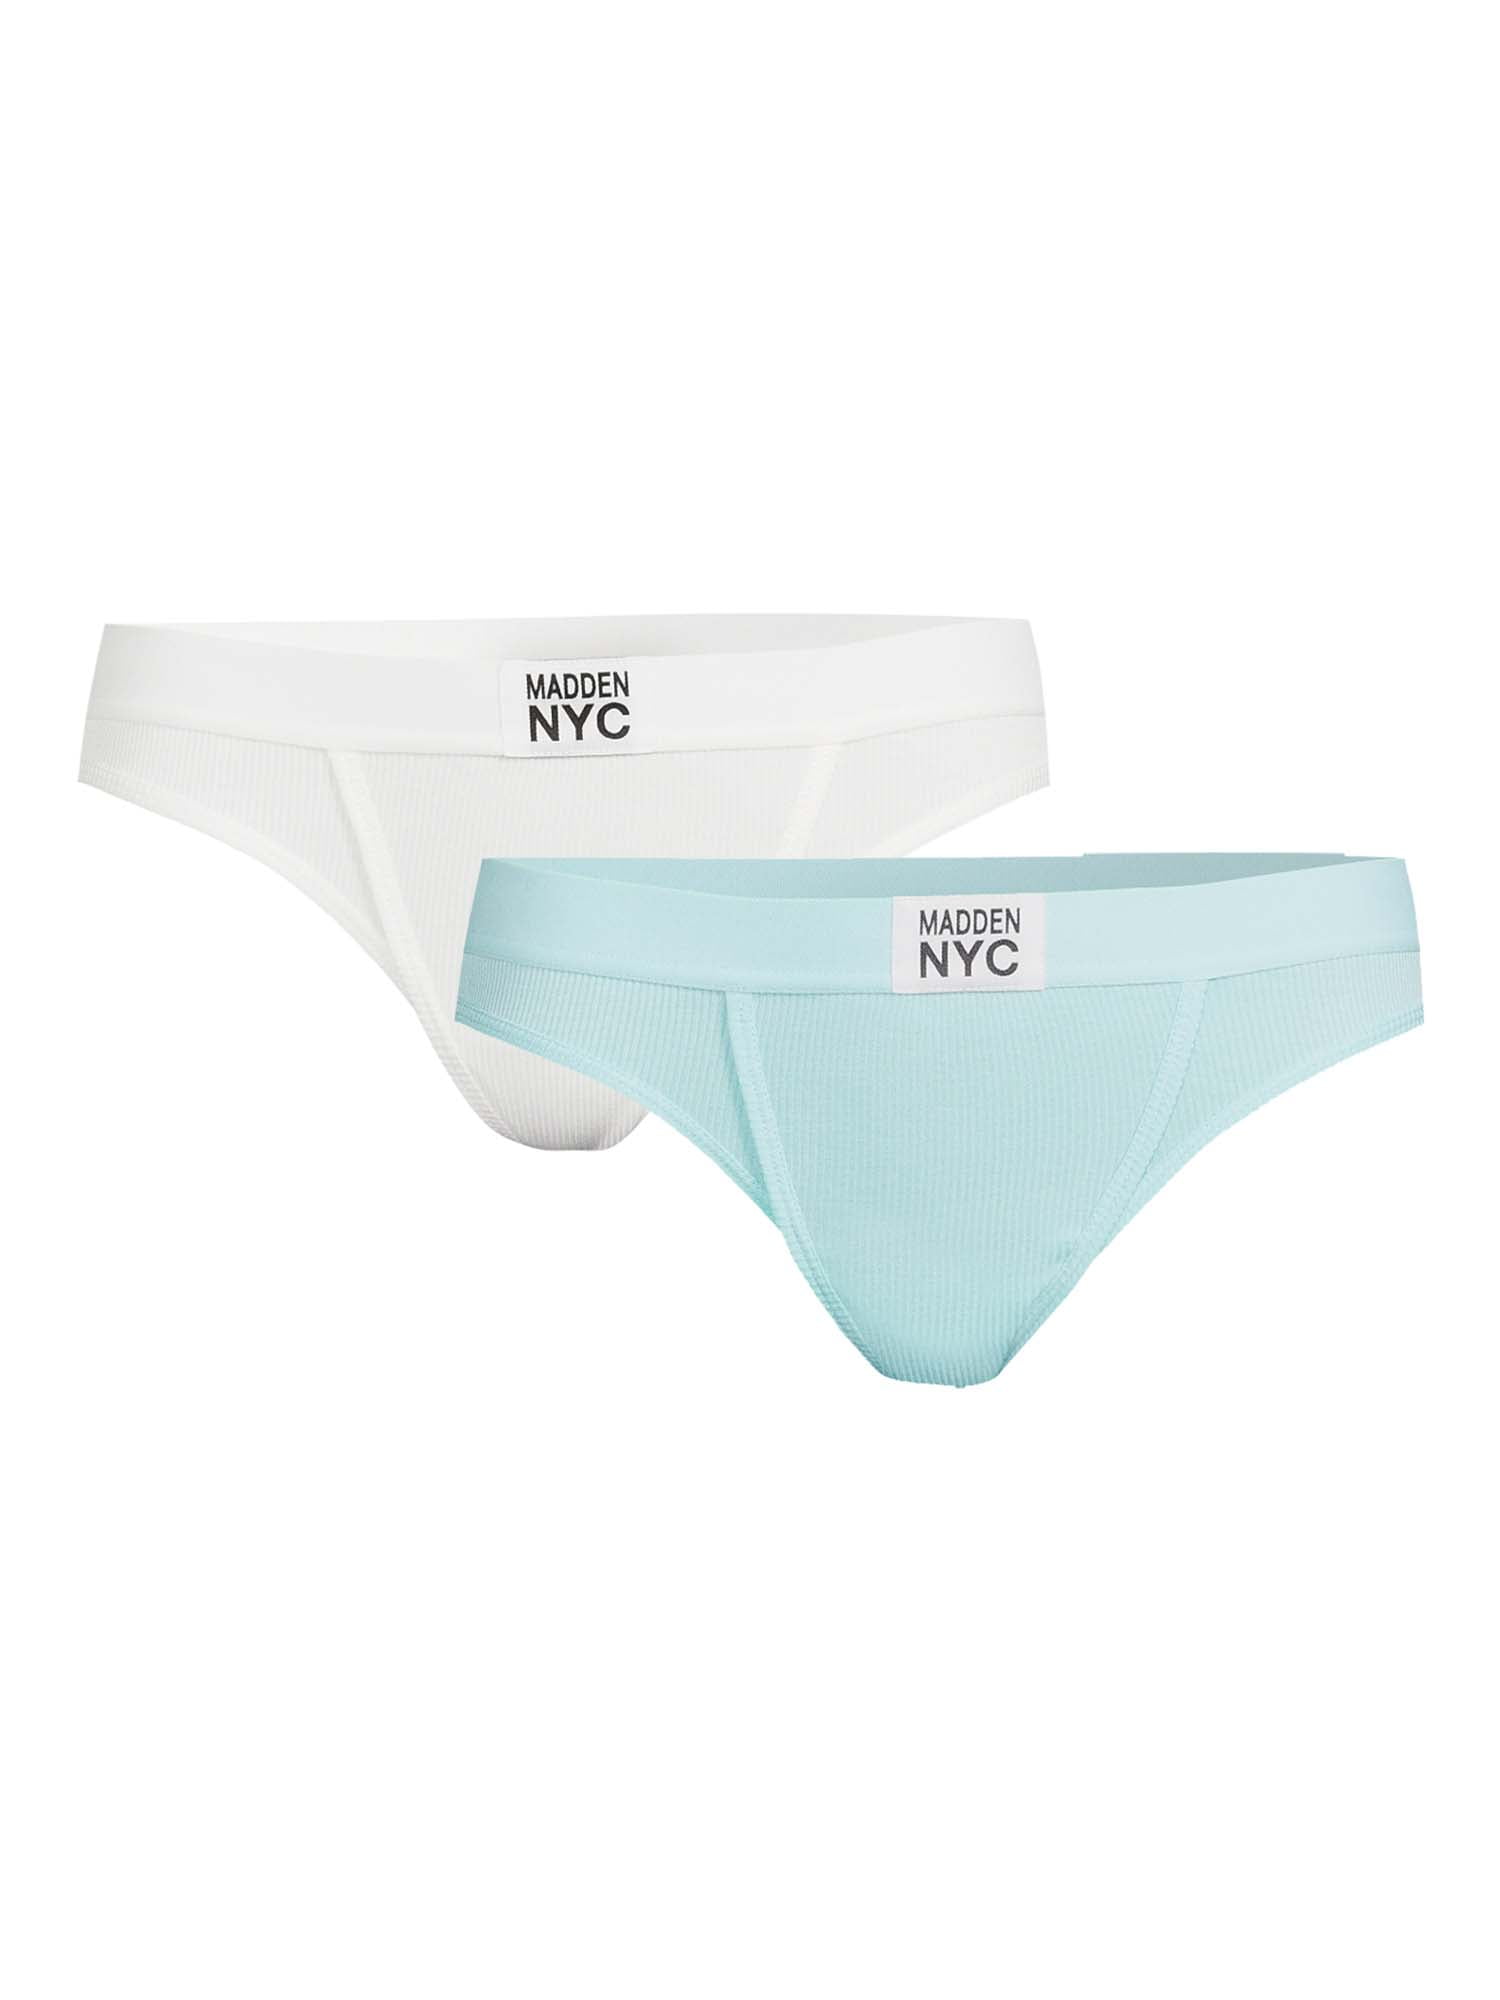 Madden NYC Women's Lace Cheeky Bikini Panties, 2-Pack 